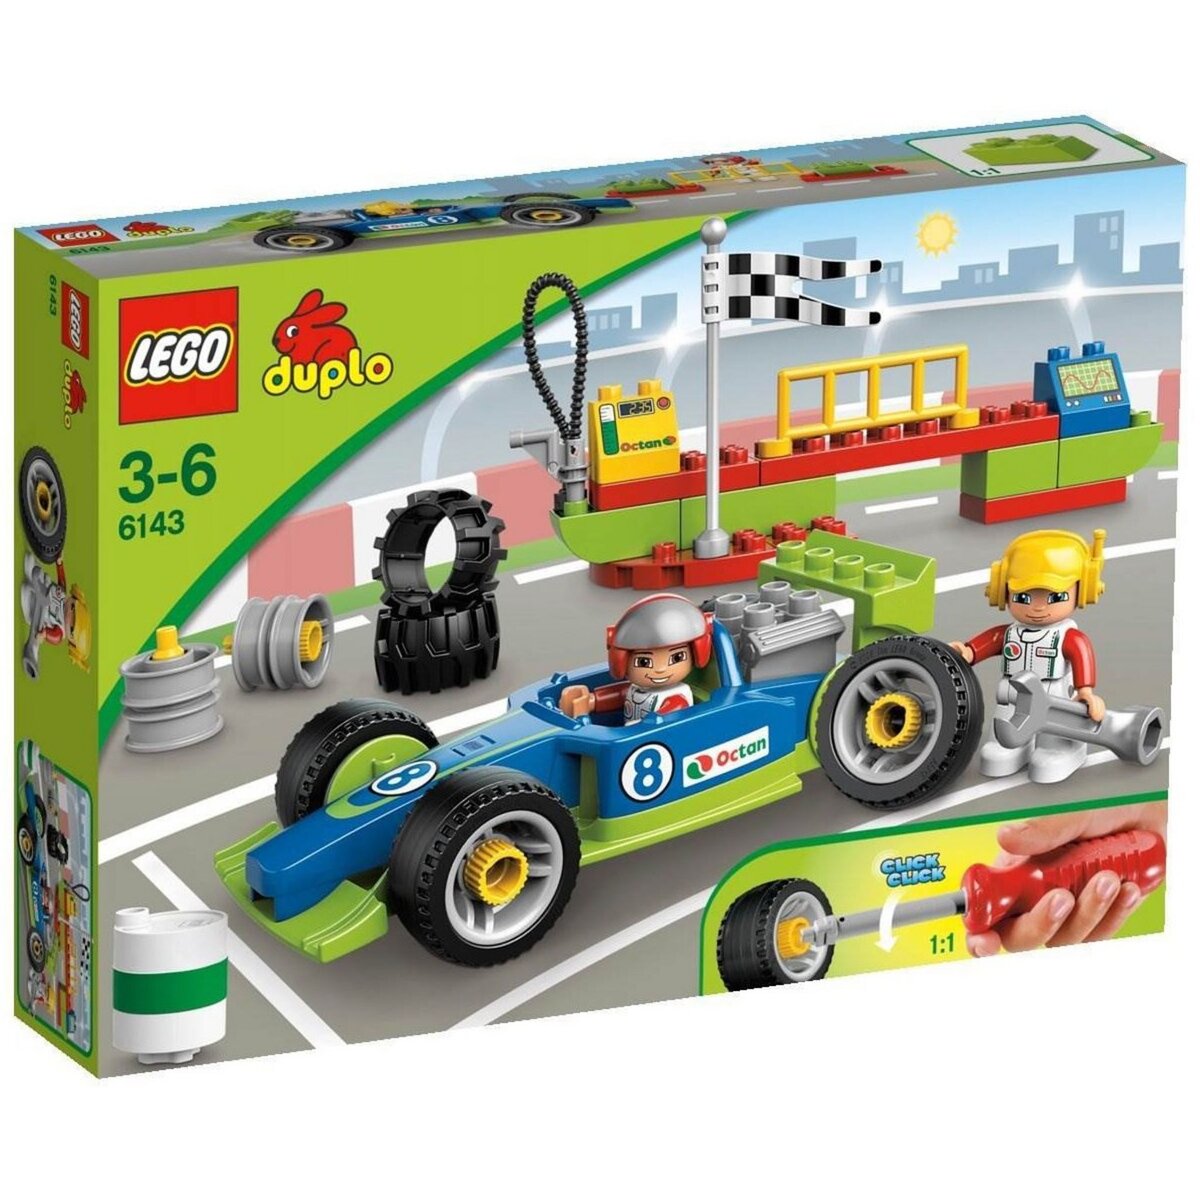 LEGO Duplo 6143